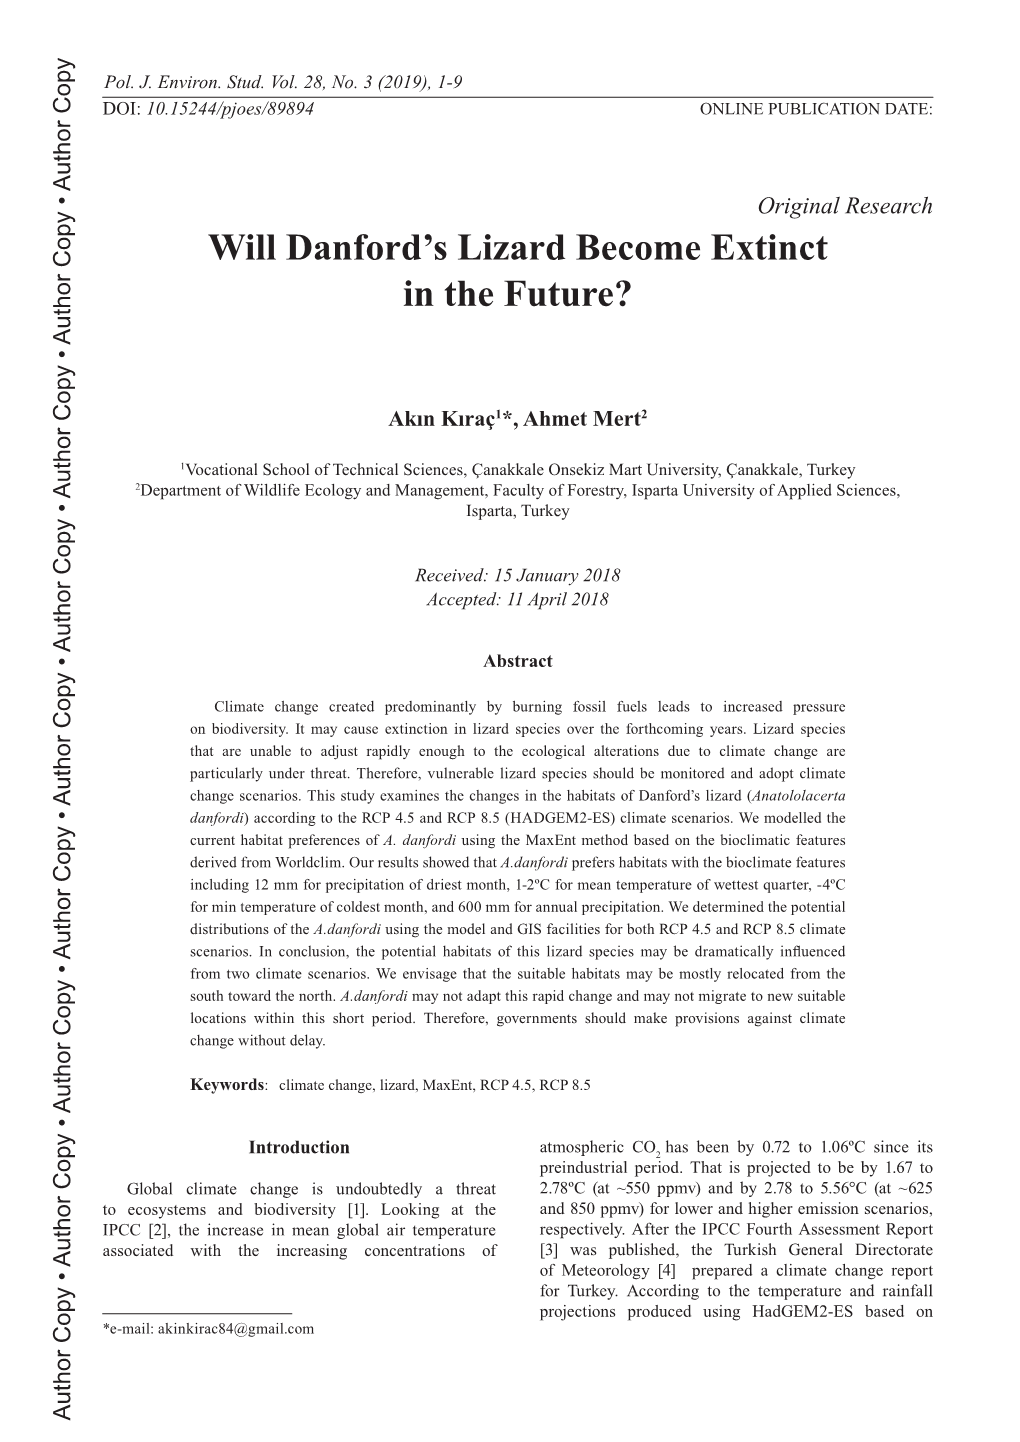 Will Danford's Lizard Become Extinct in the Future?